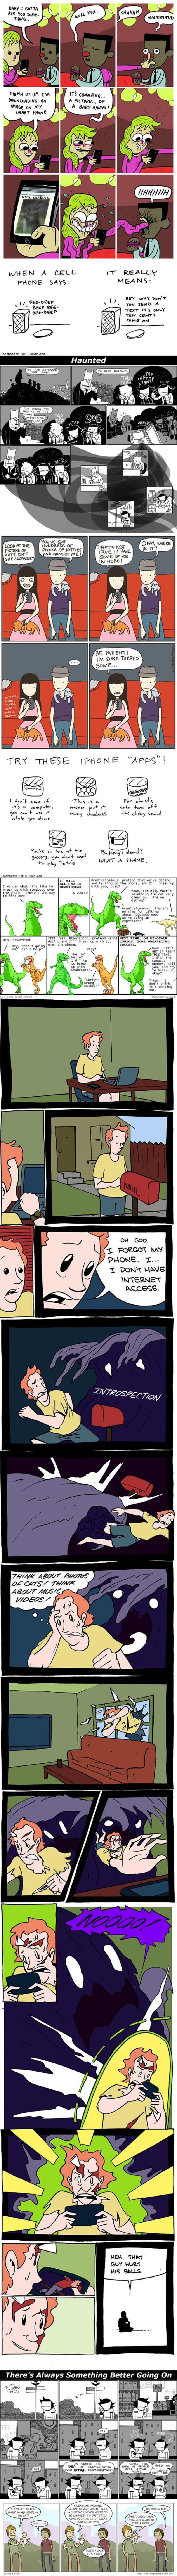 Smartphone comics